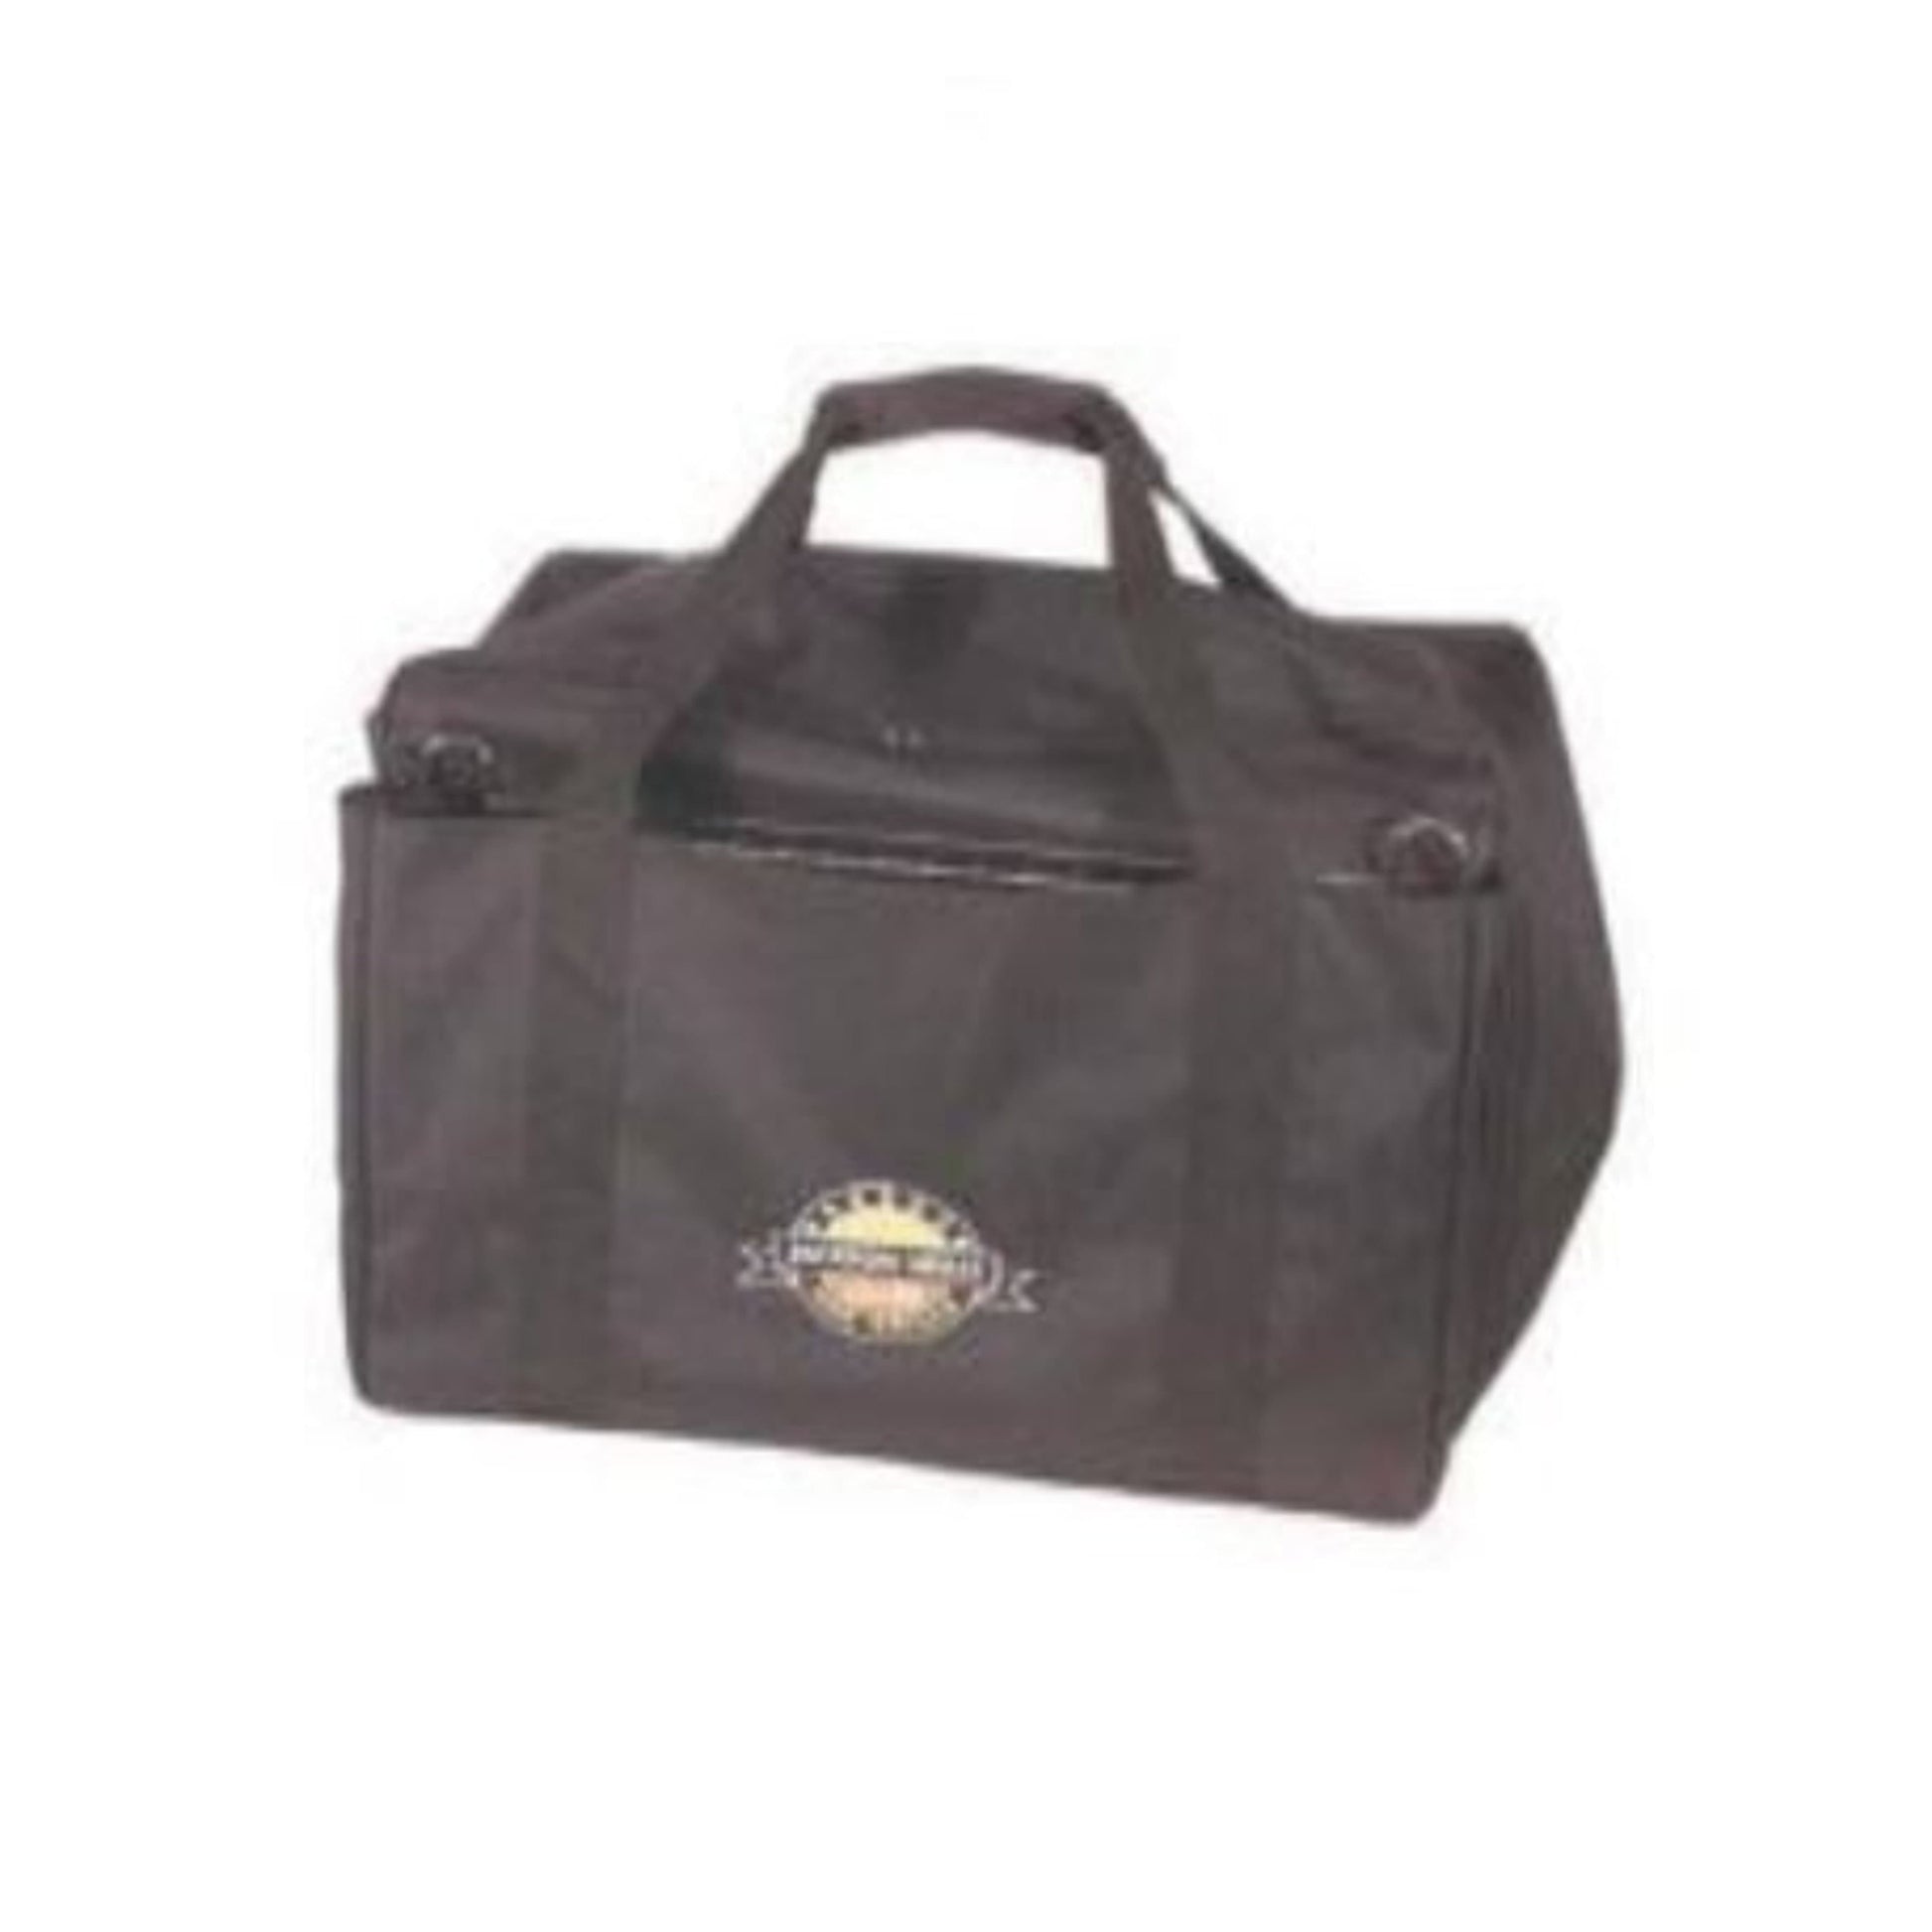 Jackson Grills Versa 75 Series Carry Bag